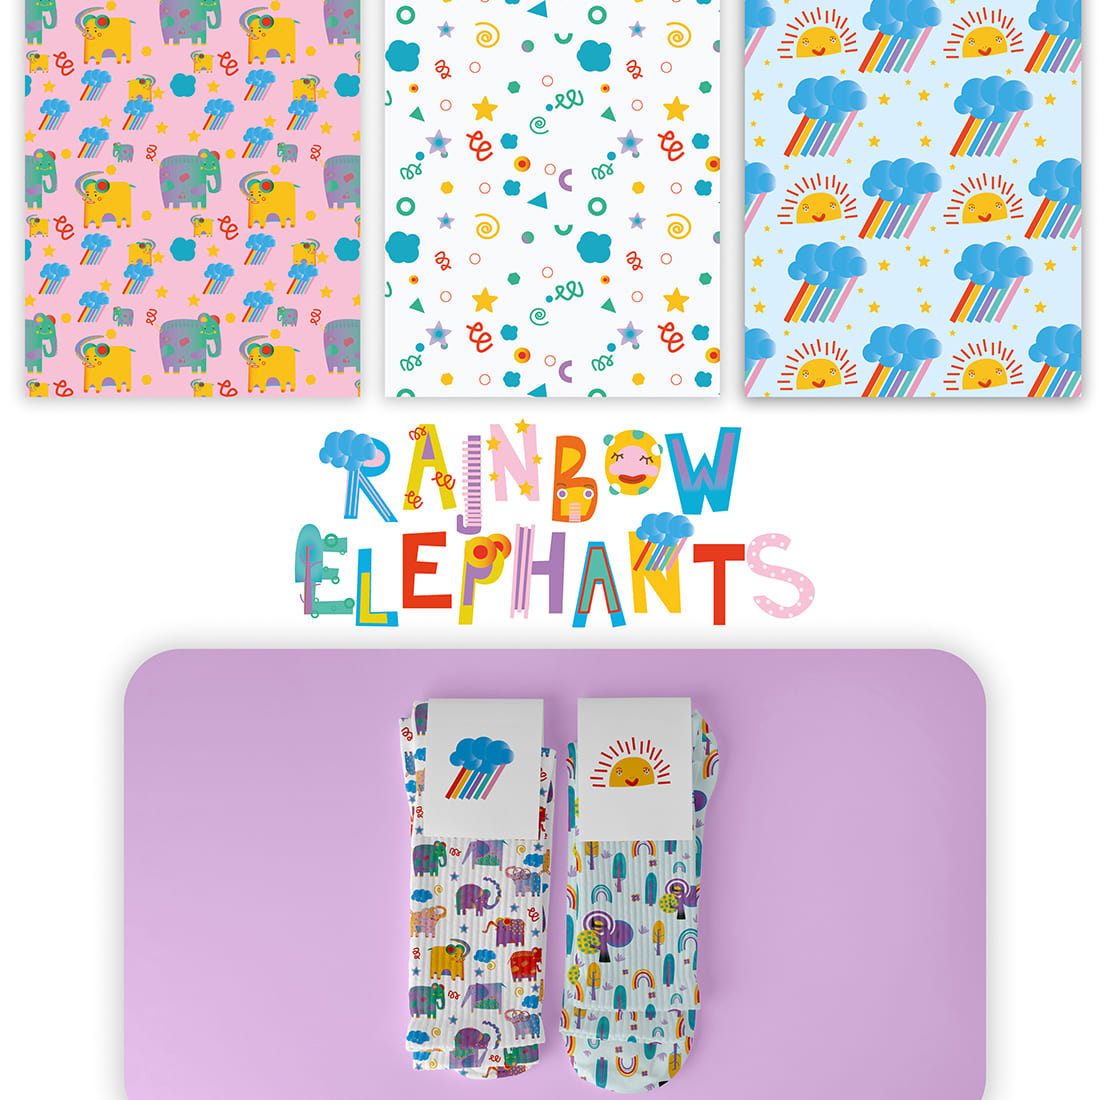 Rainbow Elephants Set Seamless Pattern pinterest image.